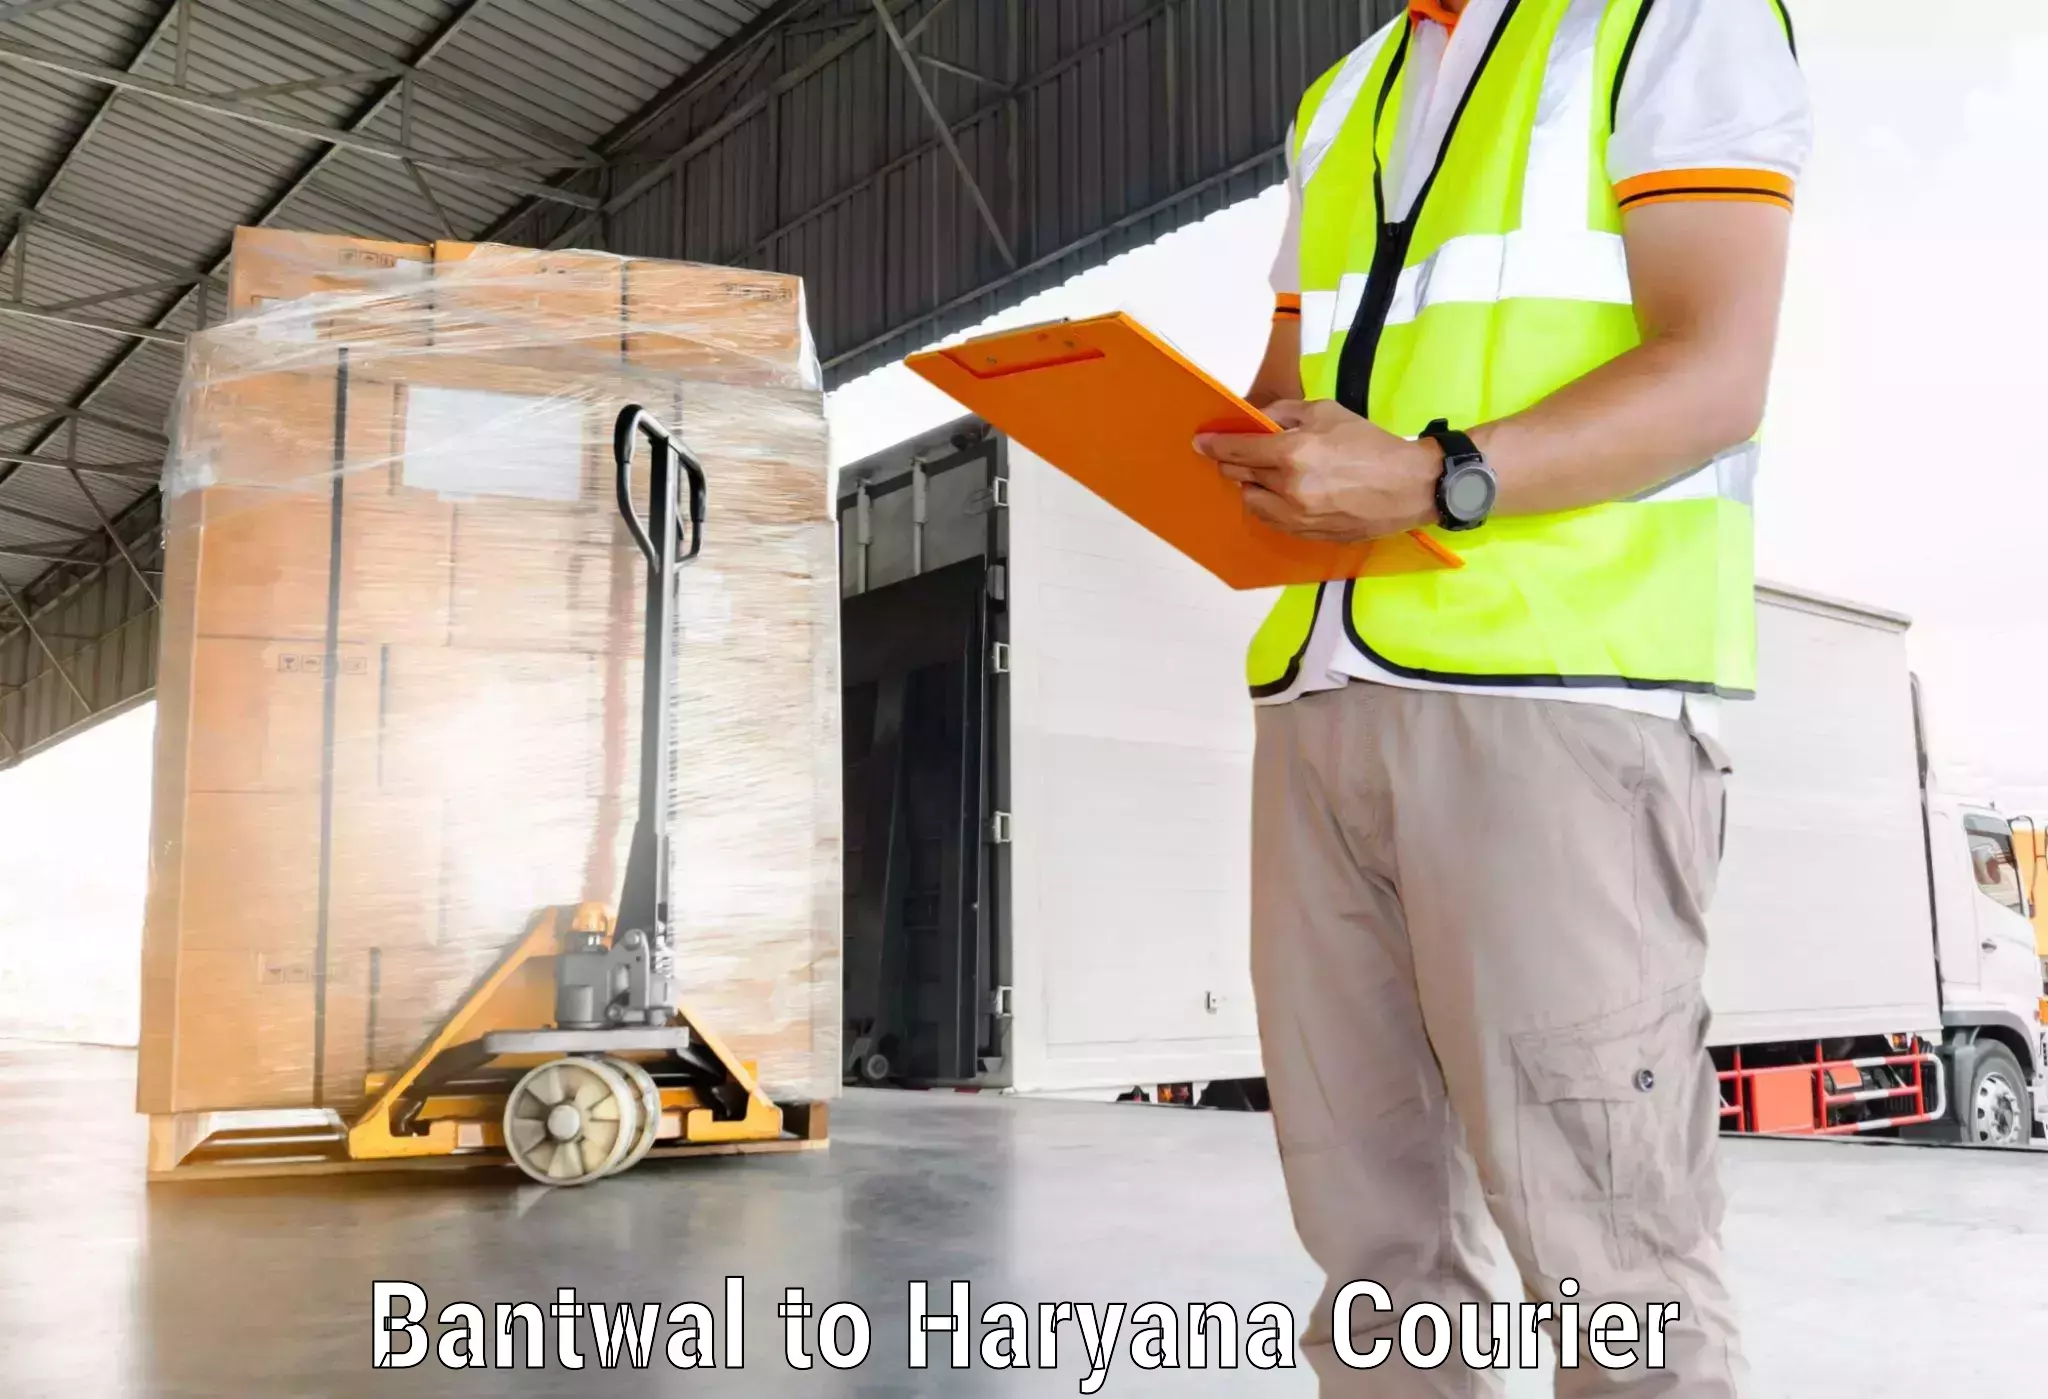 Advanced shipping technology Bantwal to Hansi